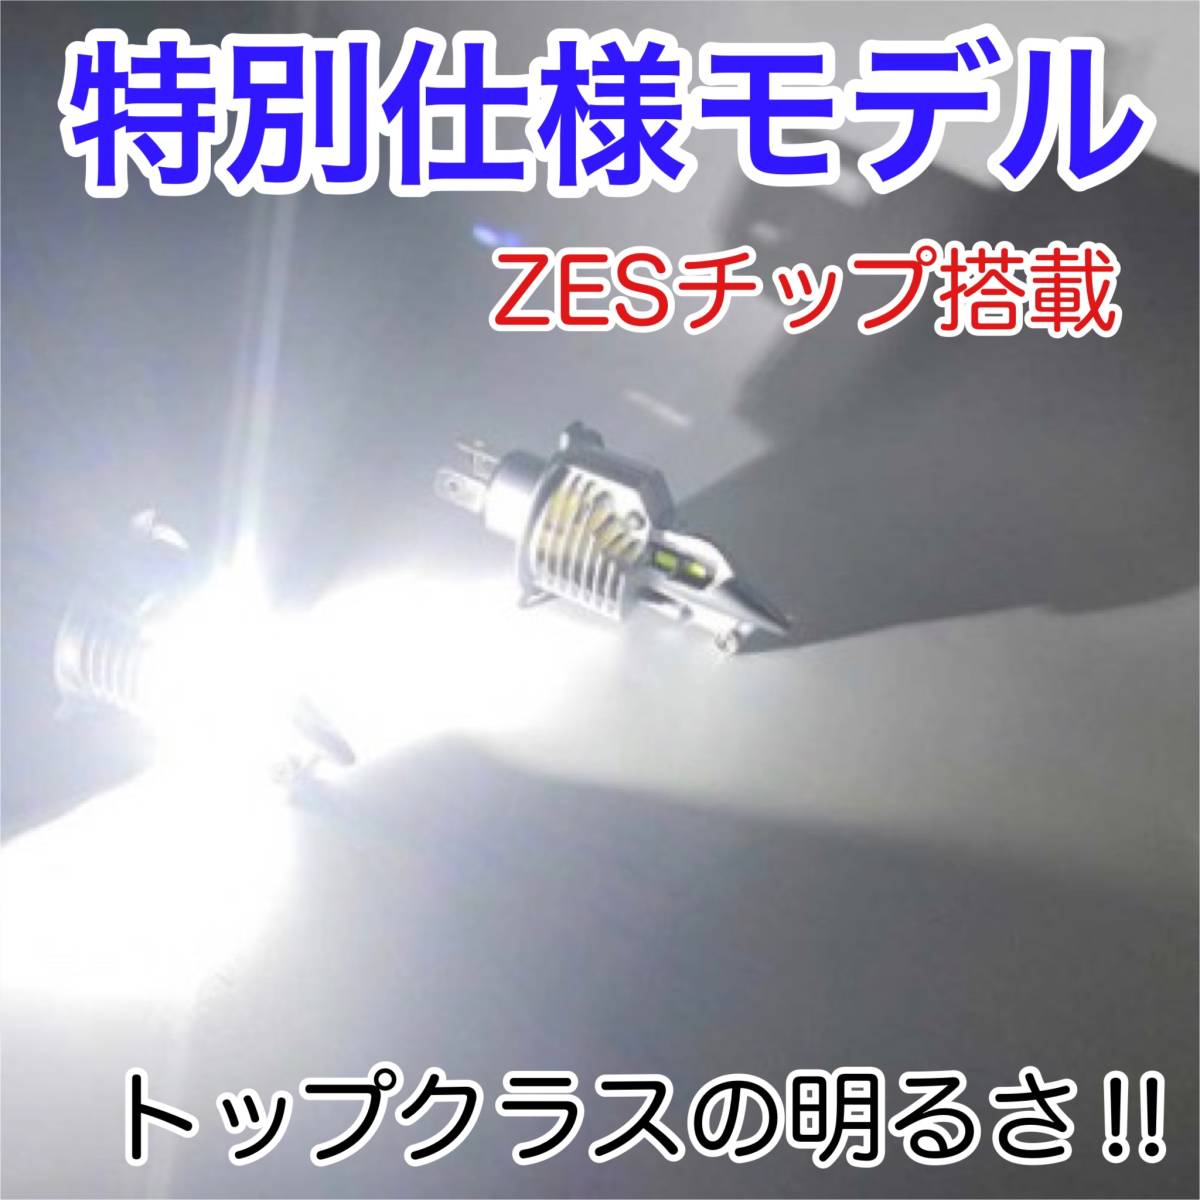 KAWASAKI カワサキ Ninja ZX-6R 2000- ZX600J LEDヘッドライト H4 Hi/Lo バルブ バイク用 1灯 S25 テールランプ2個 ホワイト 交換用